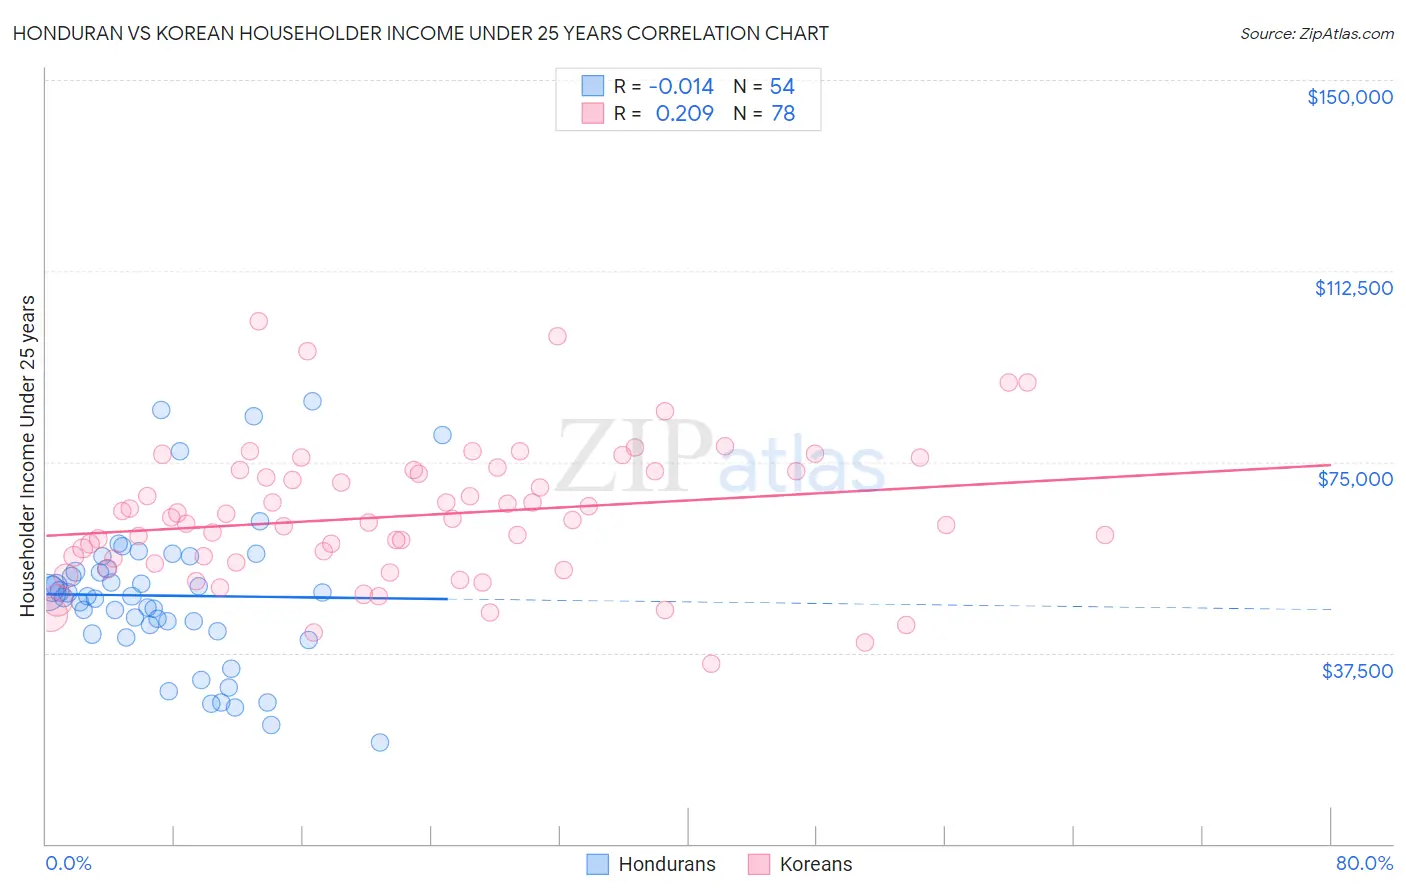 Honduran vs Korean Householder Income Under 25 years